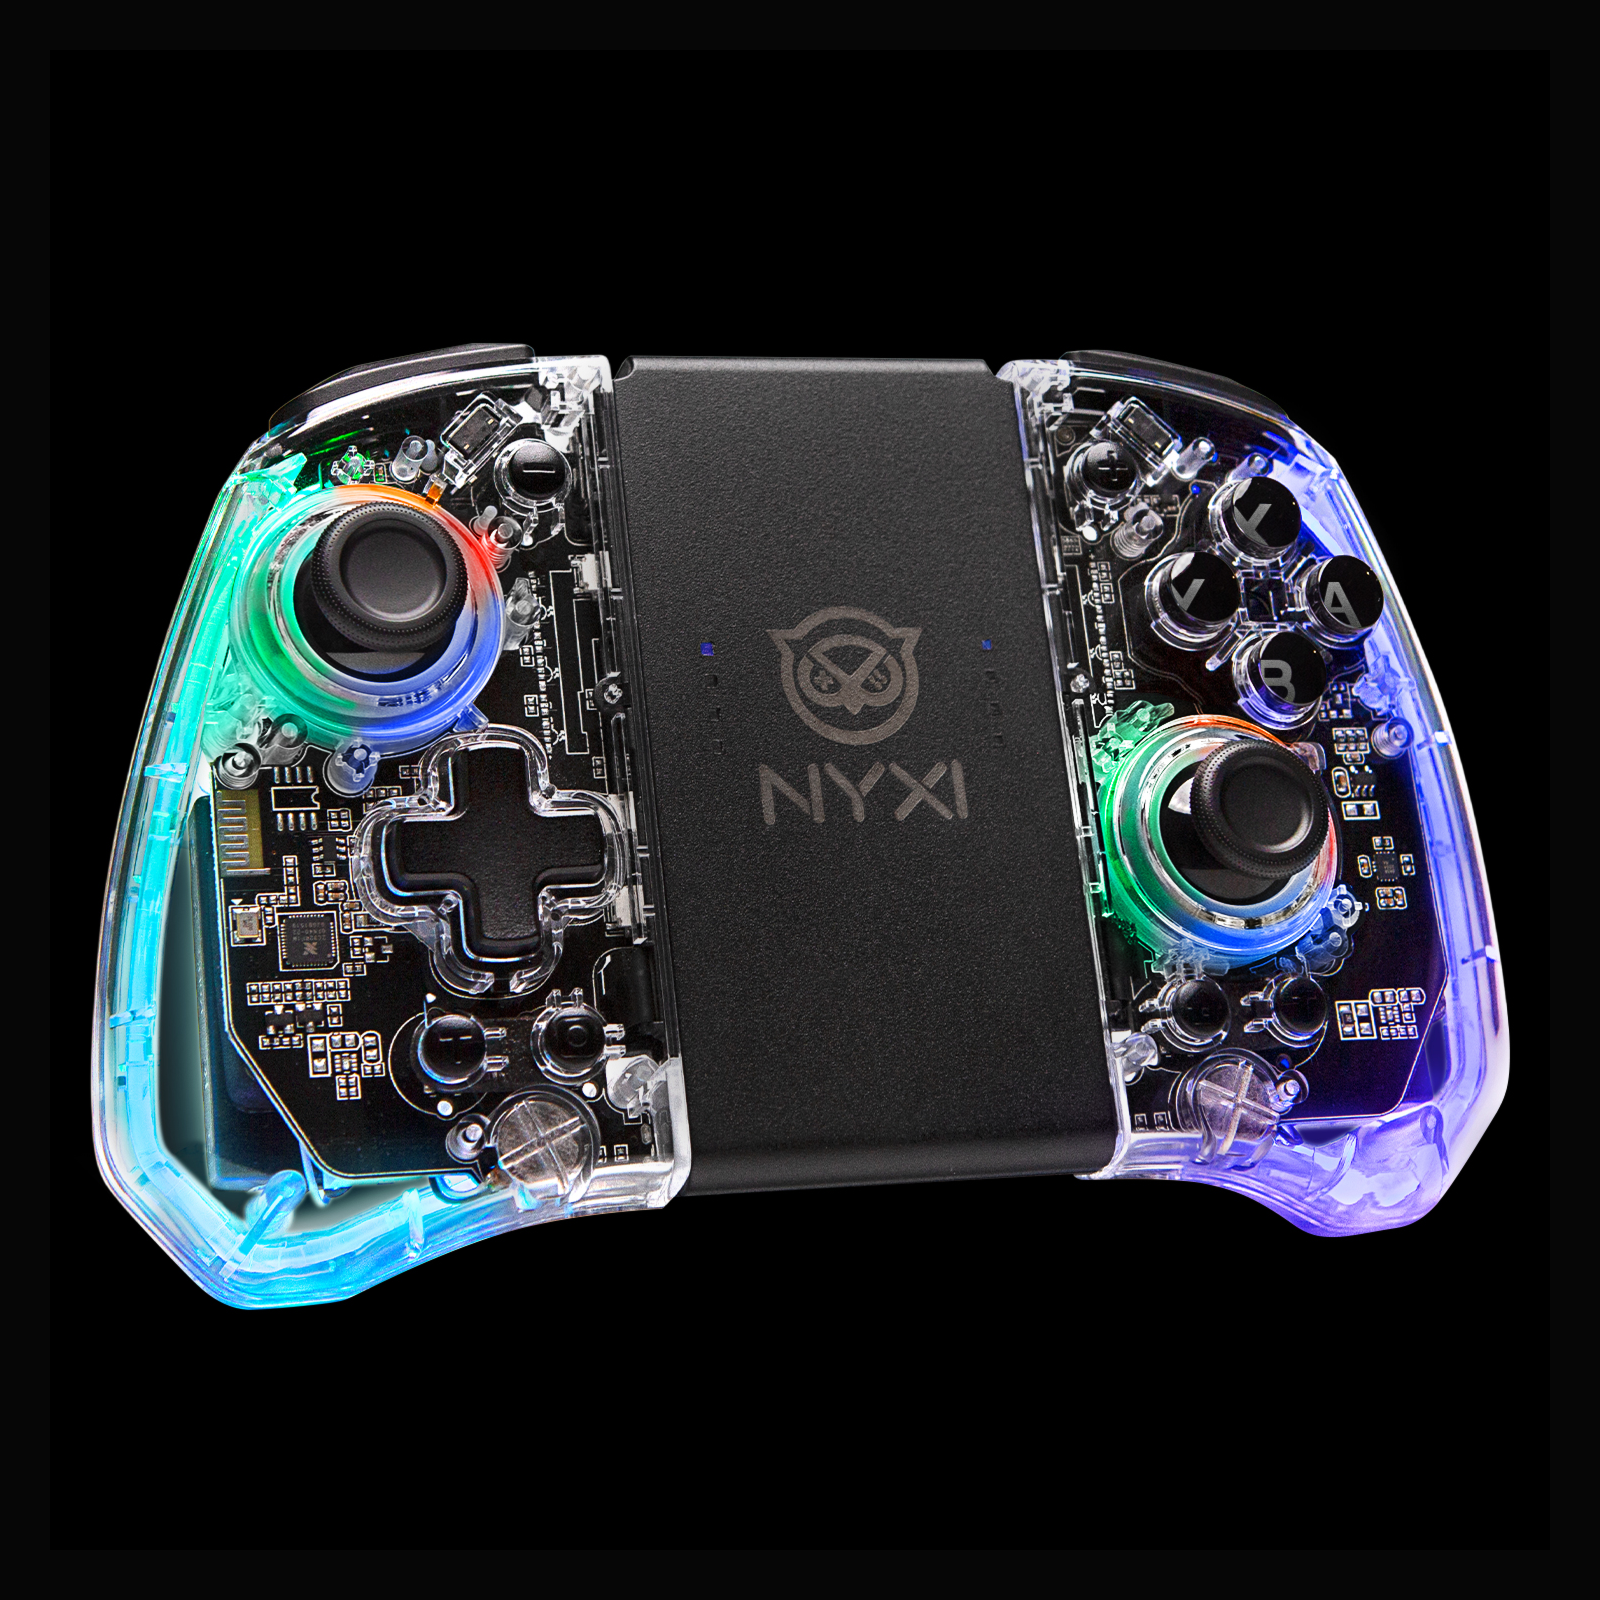 Controller JoyCon Alternative NYCI Hyperion Review! #NYXI #Hyperion #J, nintendo switch